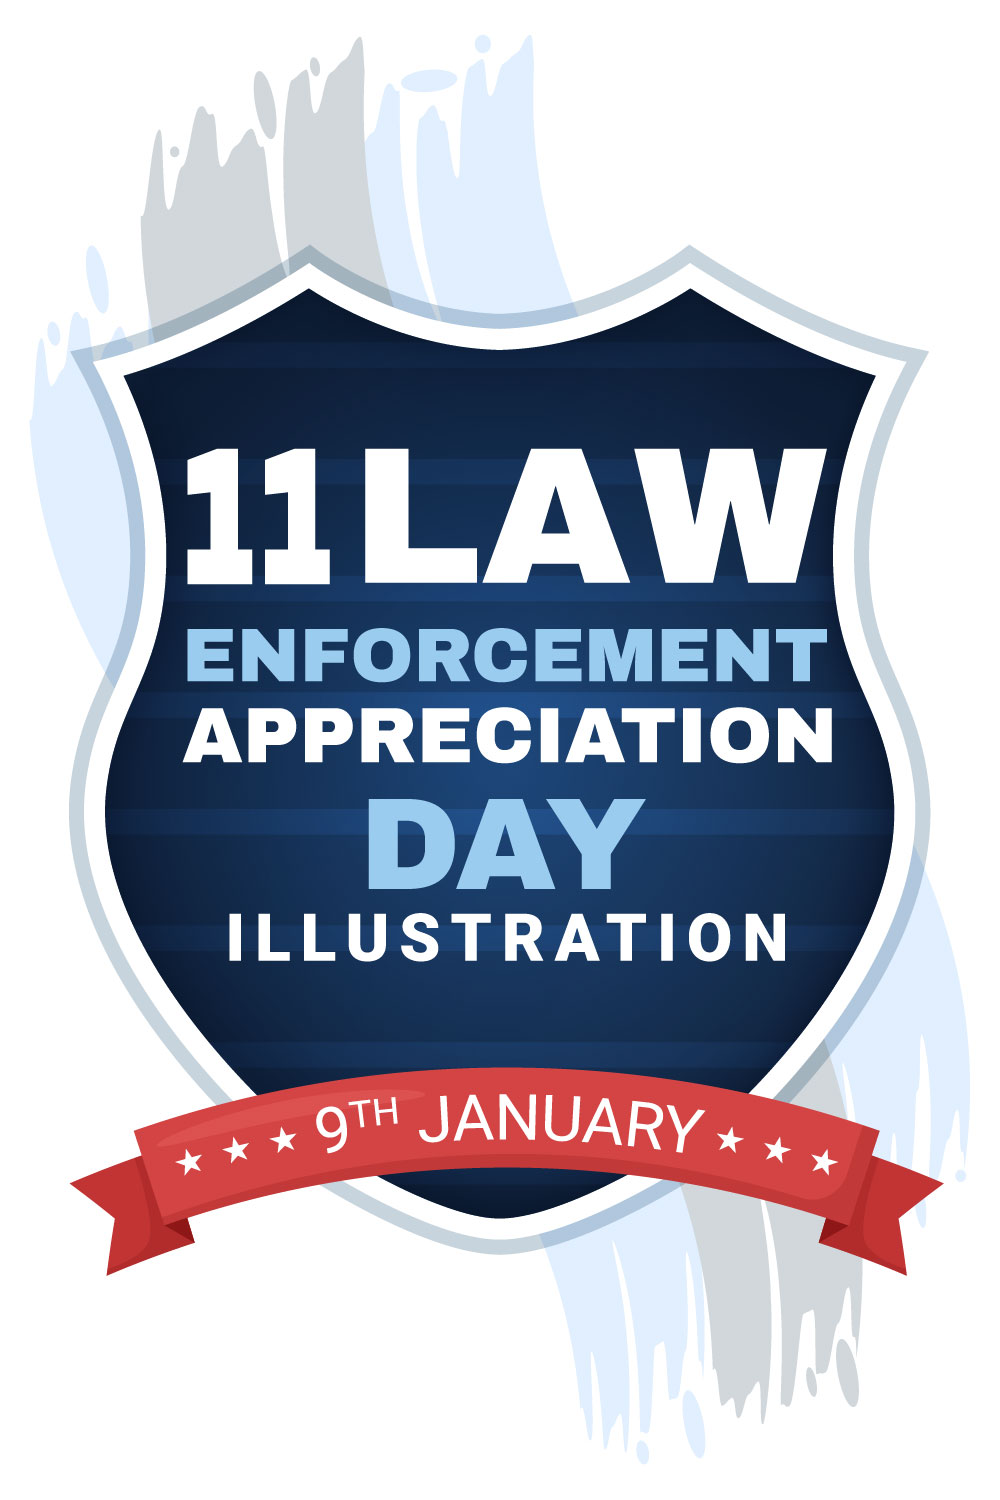 Law Enforcement Appreciation Day or LEAD Illustration pinterest image.